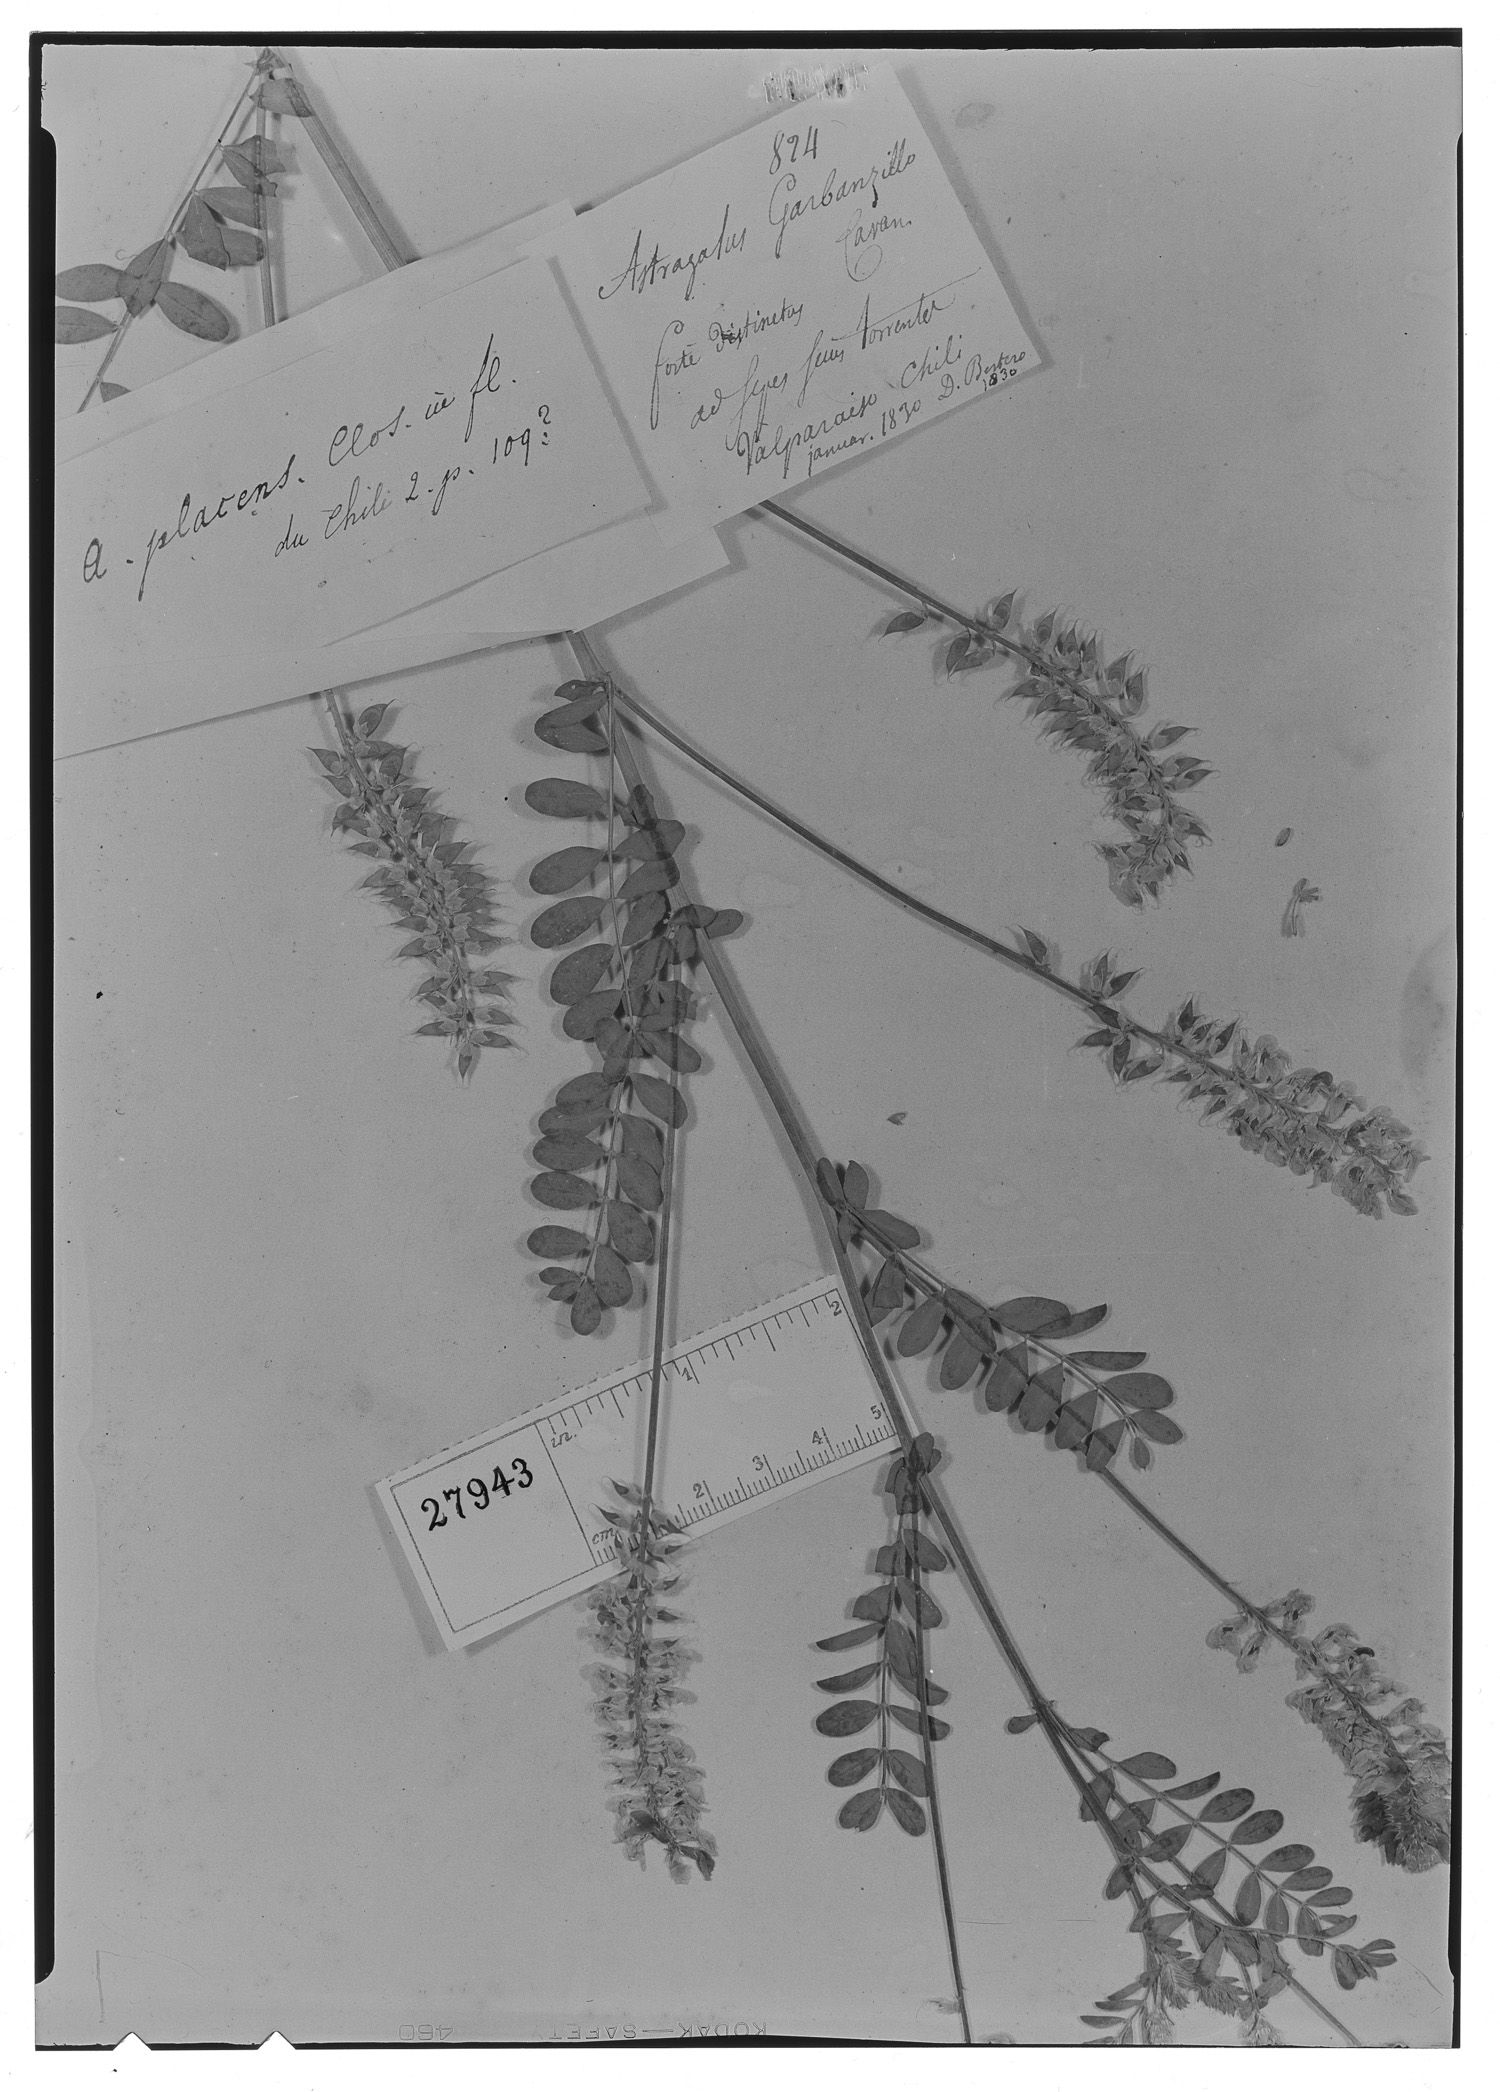 Astragalus placens image